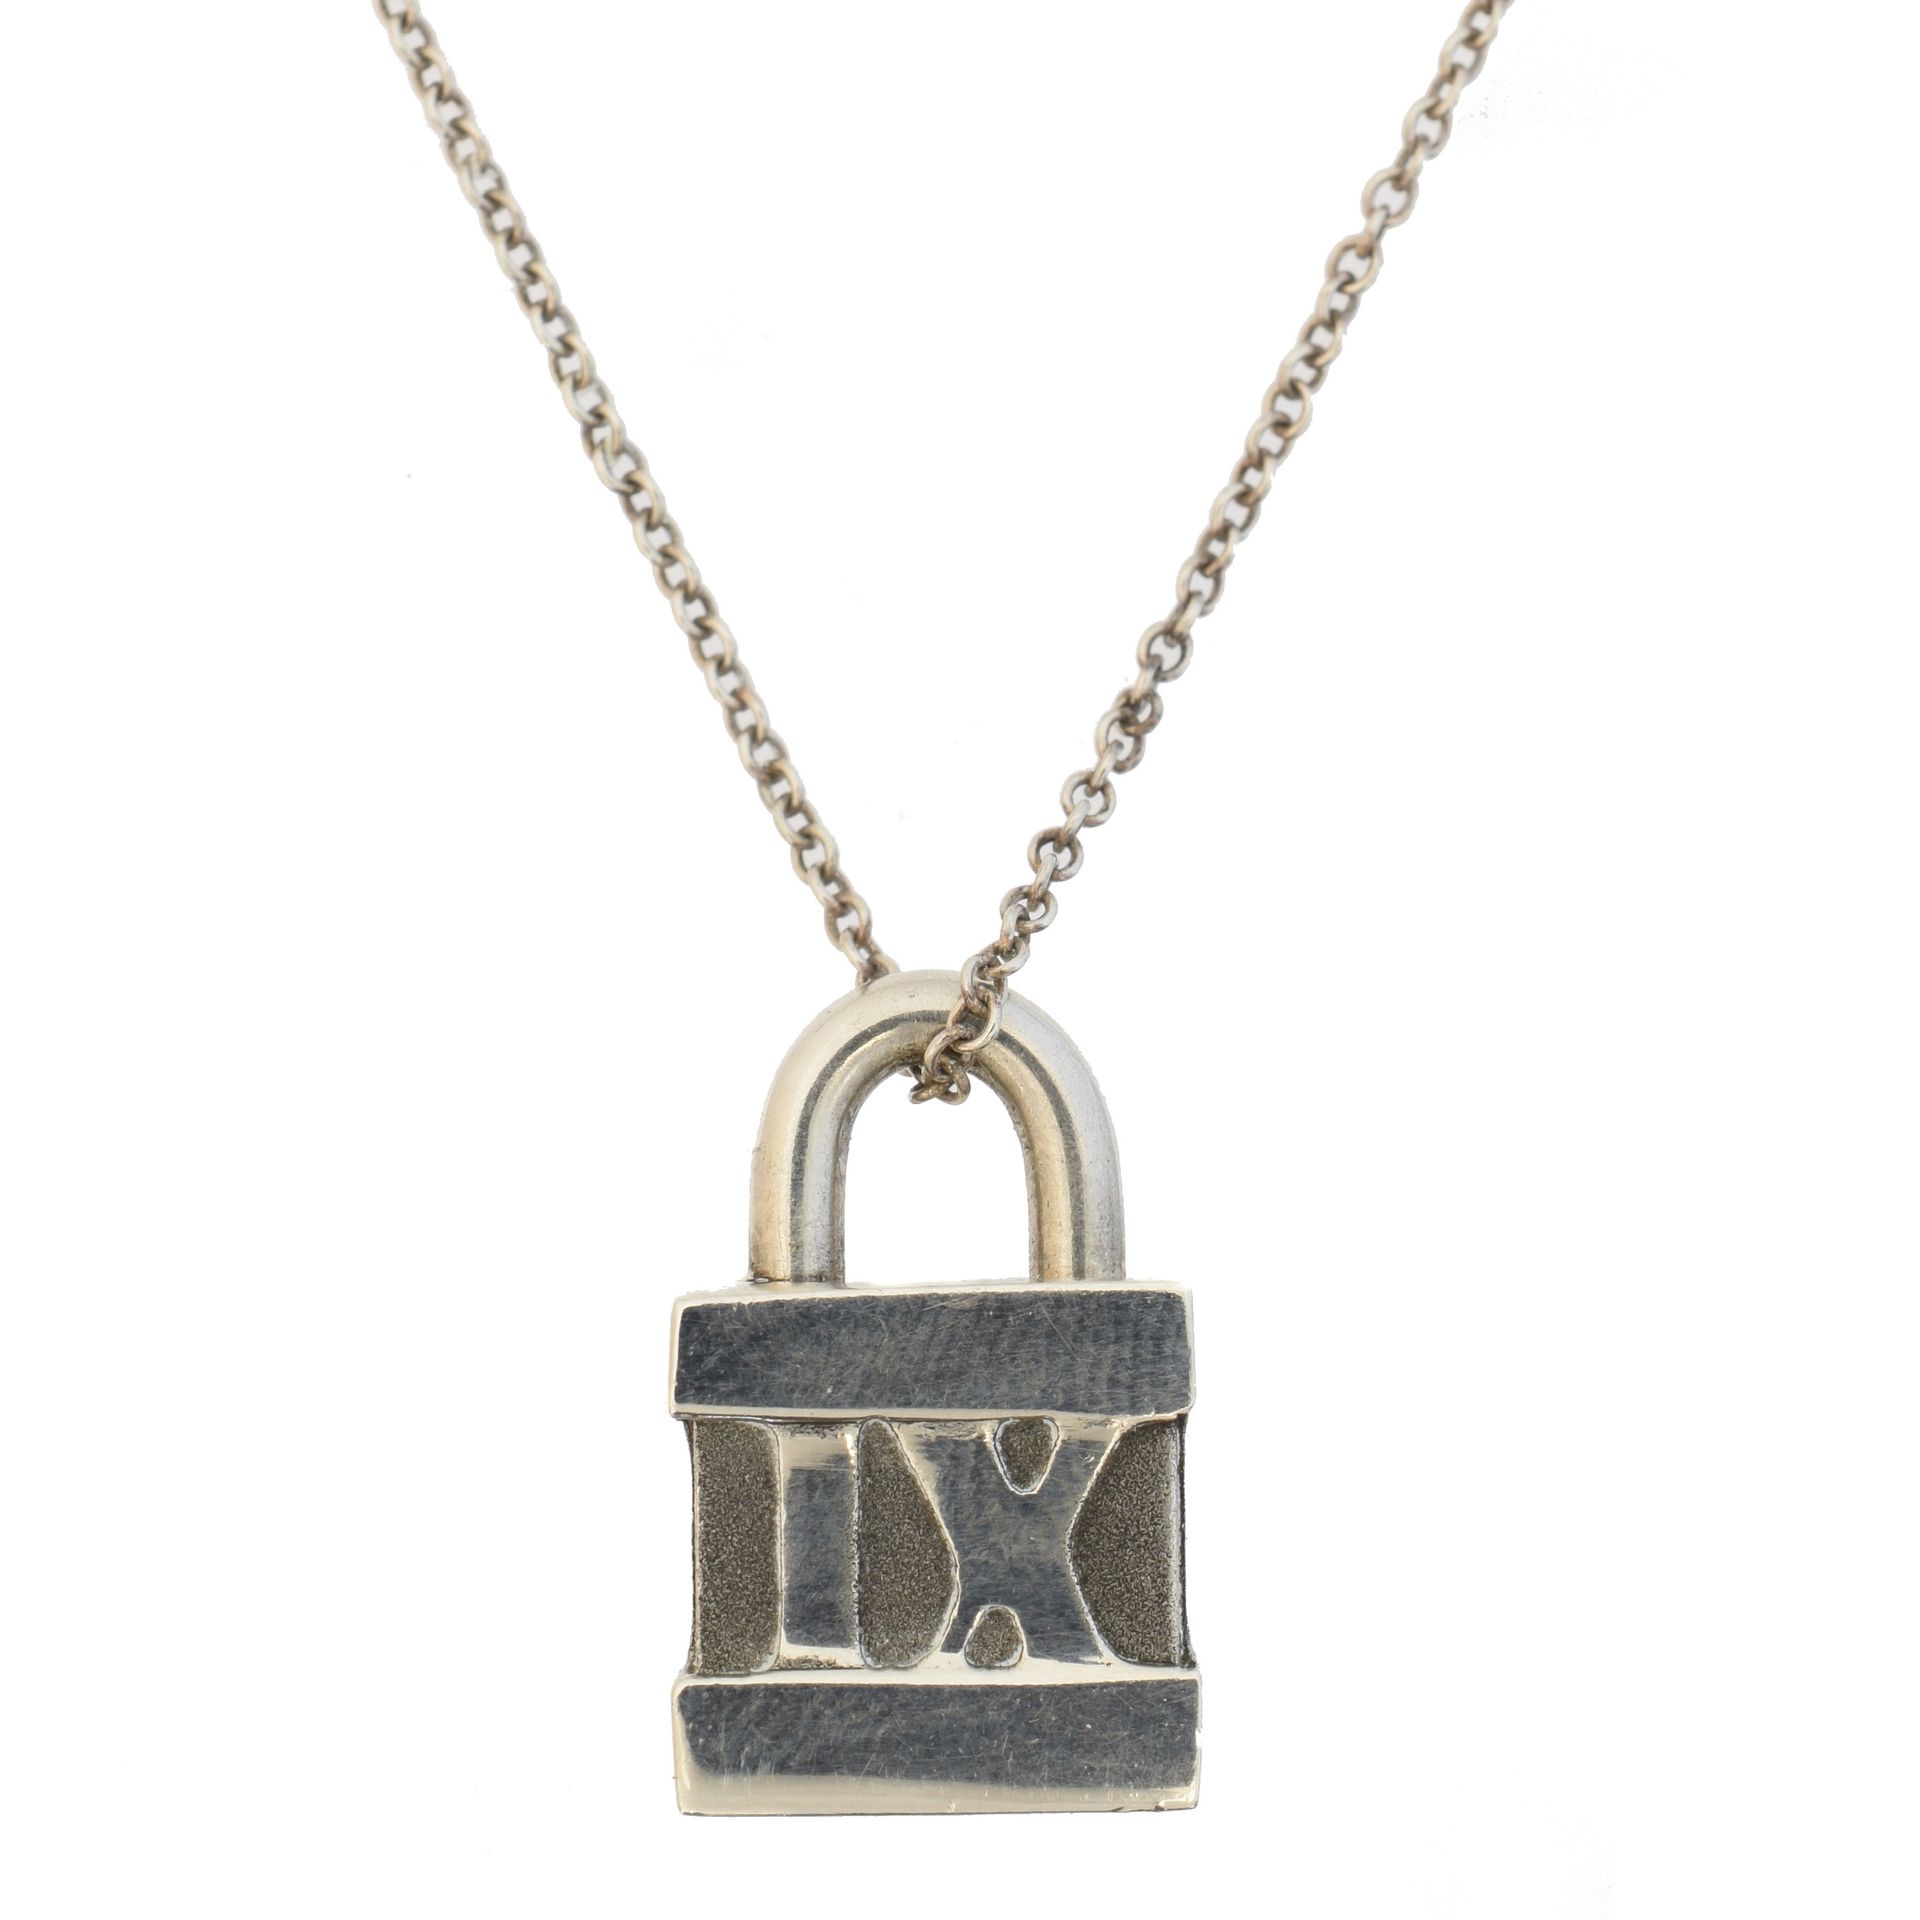 A Tiffany & Co. 'Atlas Cube Padlock' pendant, 
一件蒂芙尼 "Atlas Cube挂锁 "吊坠，挂锁吊坠上有罗马数&hellip;